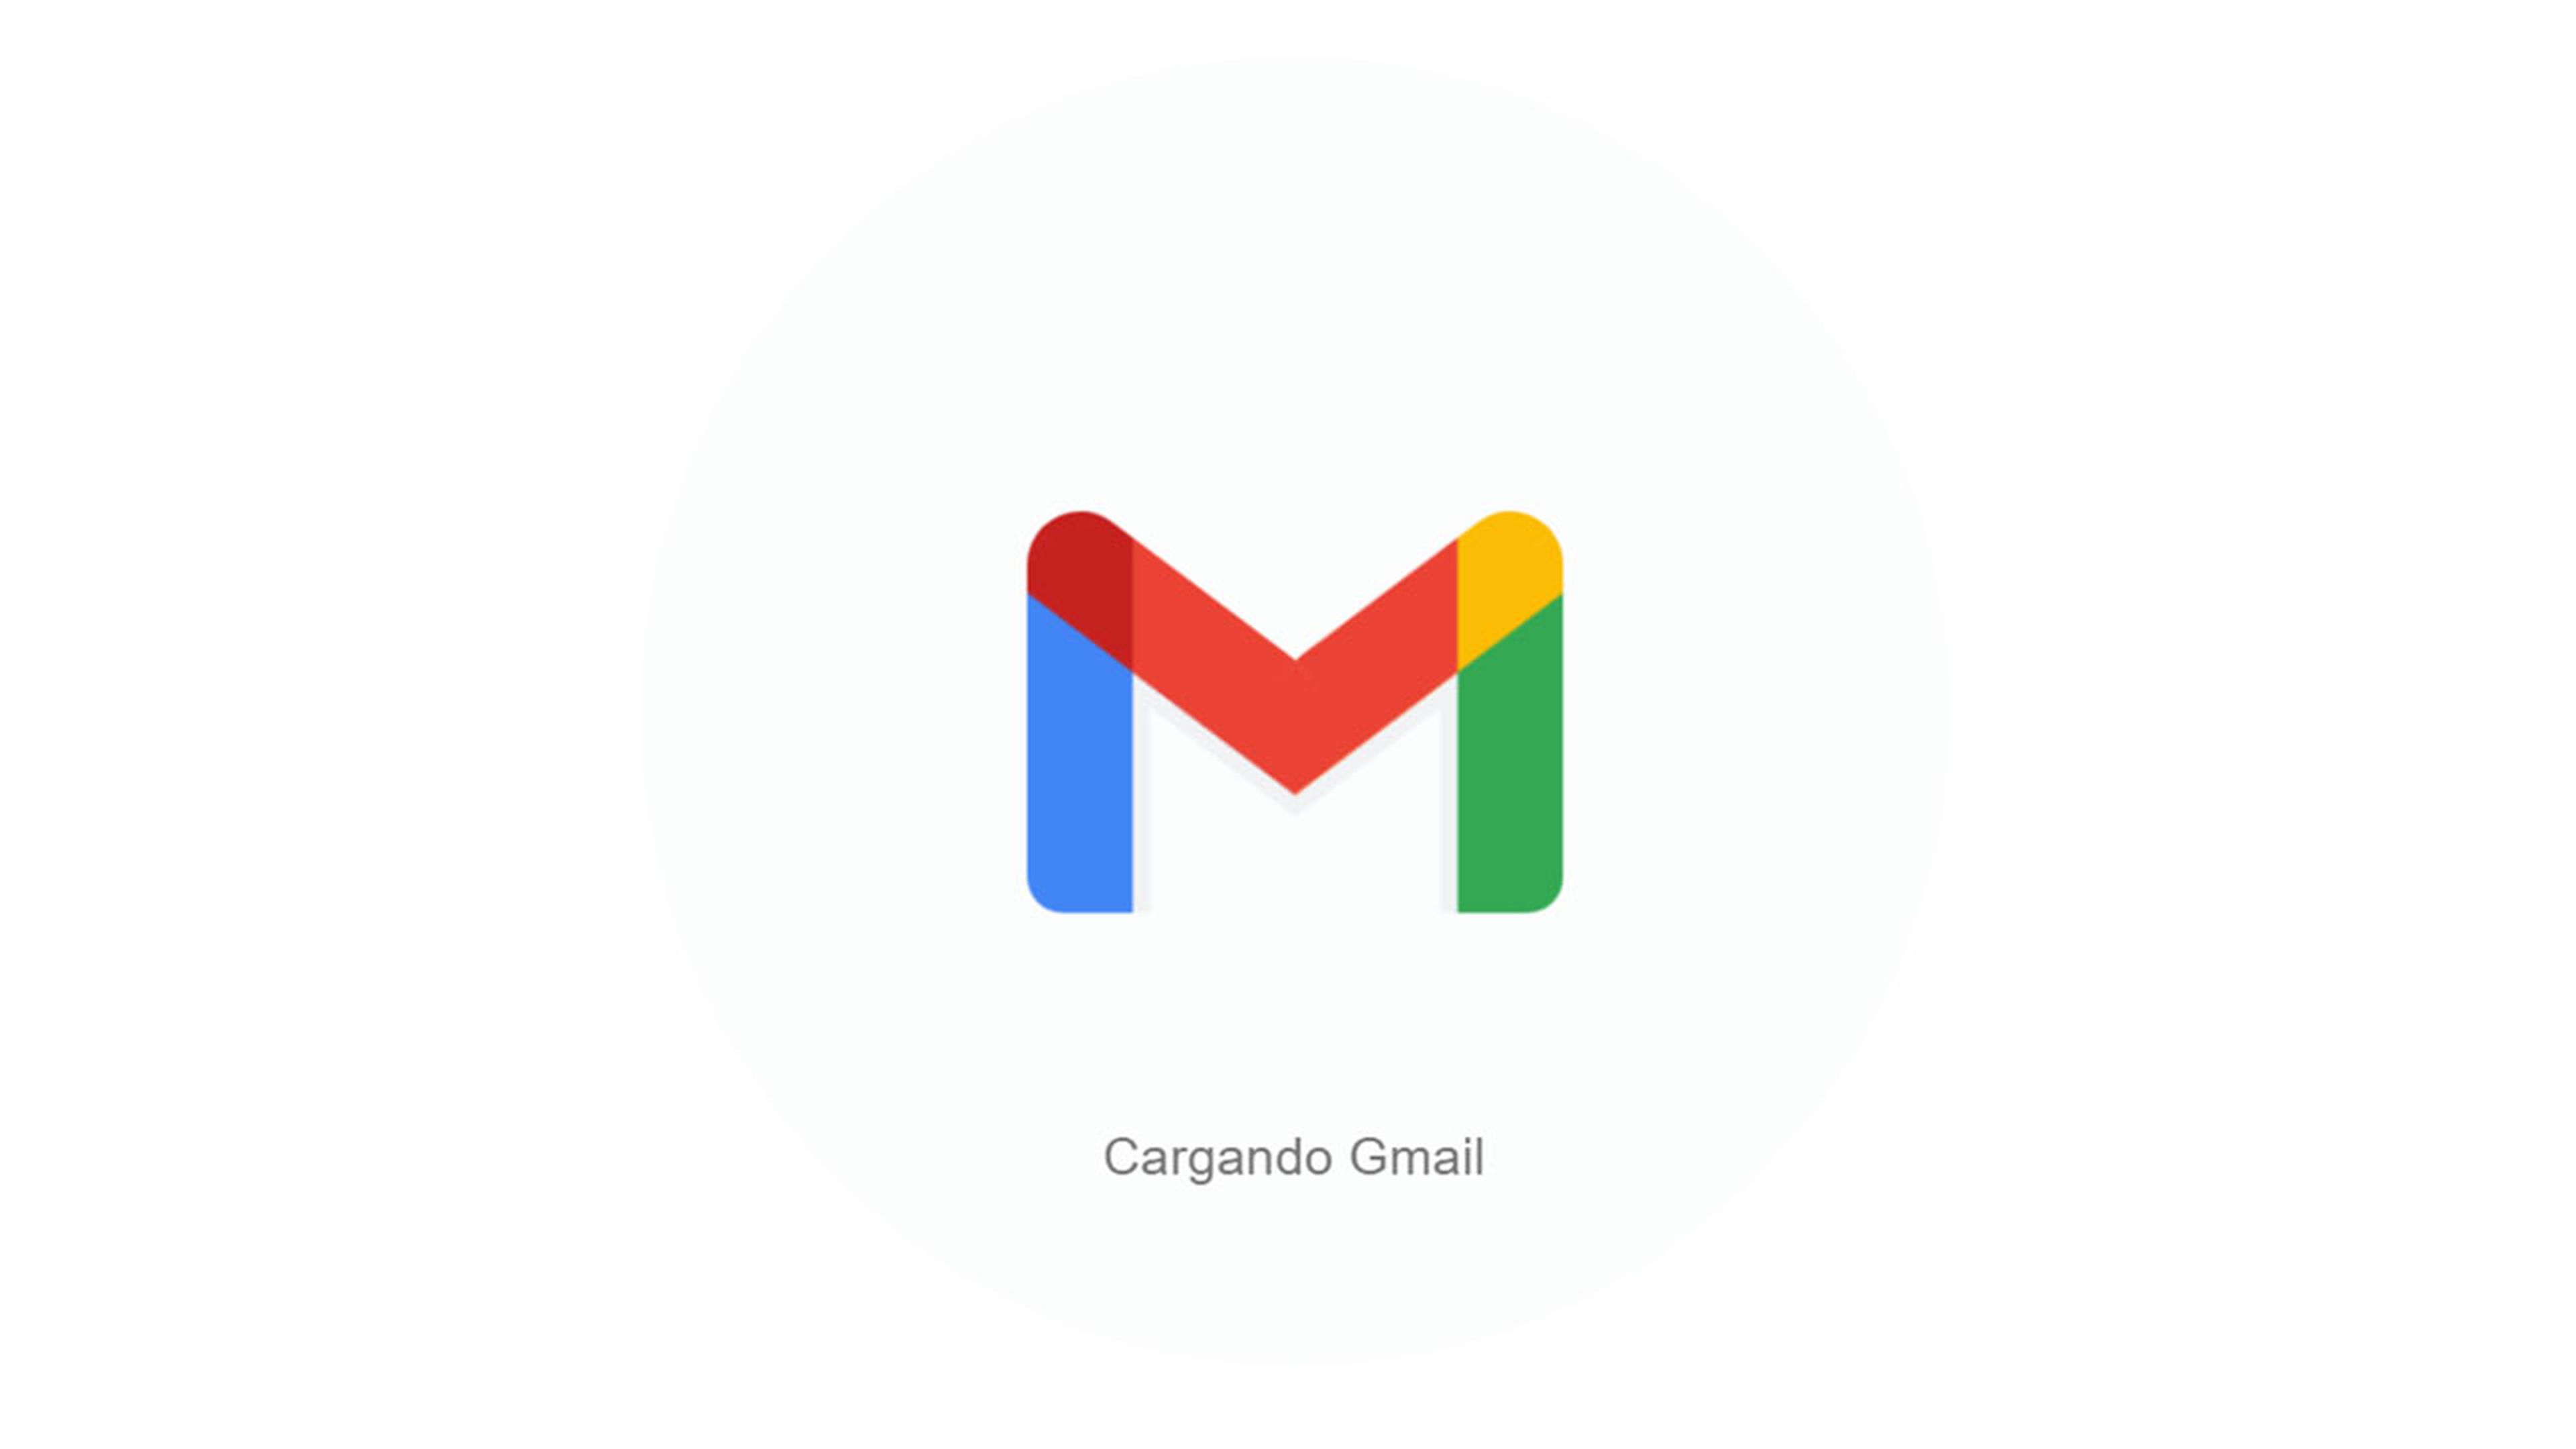 Logo Gmail